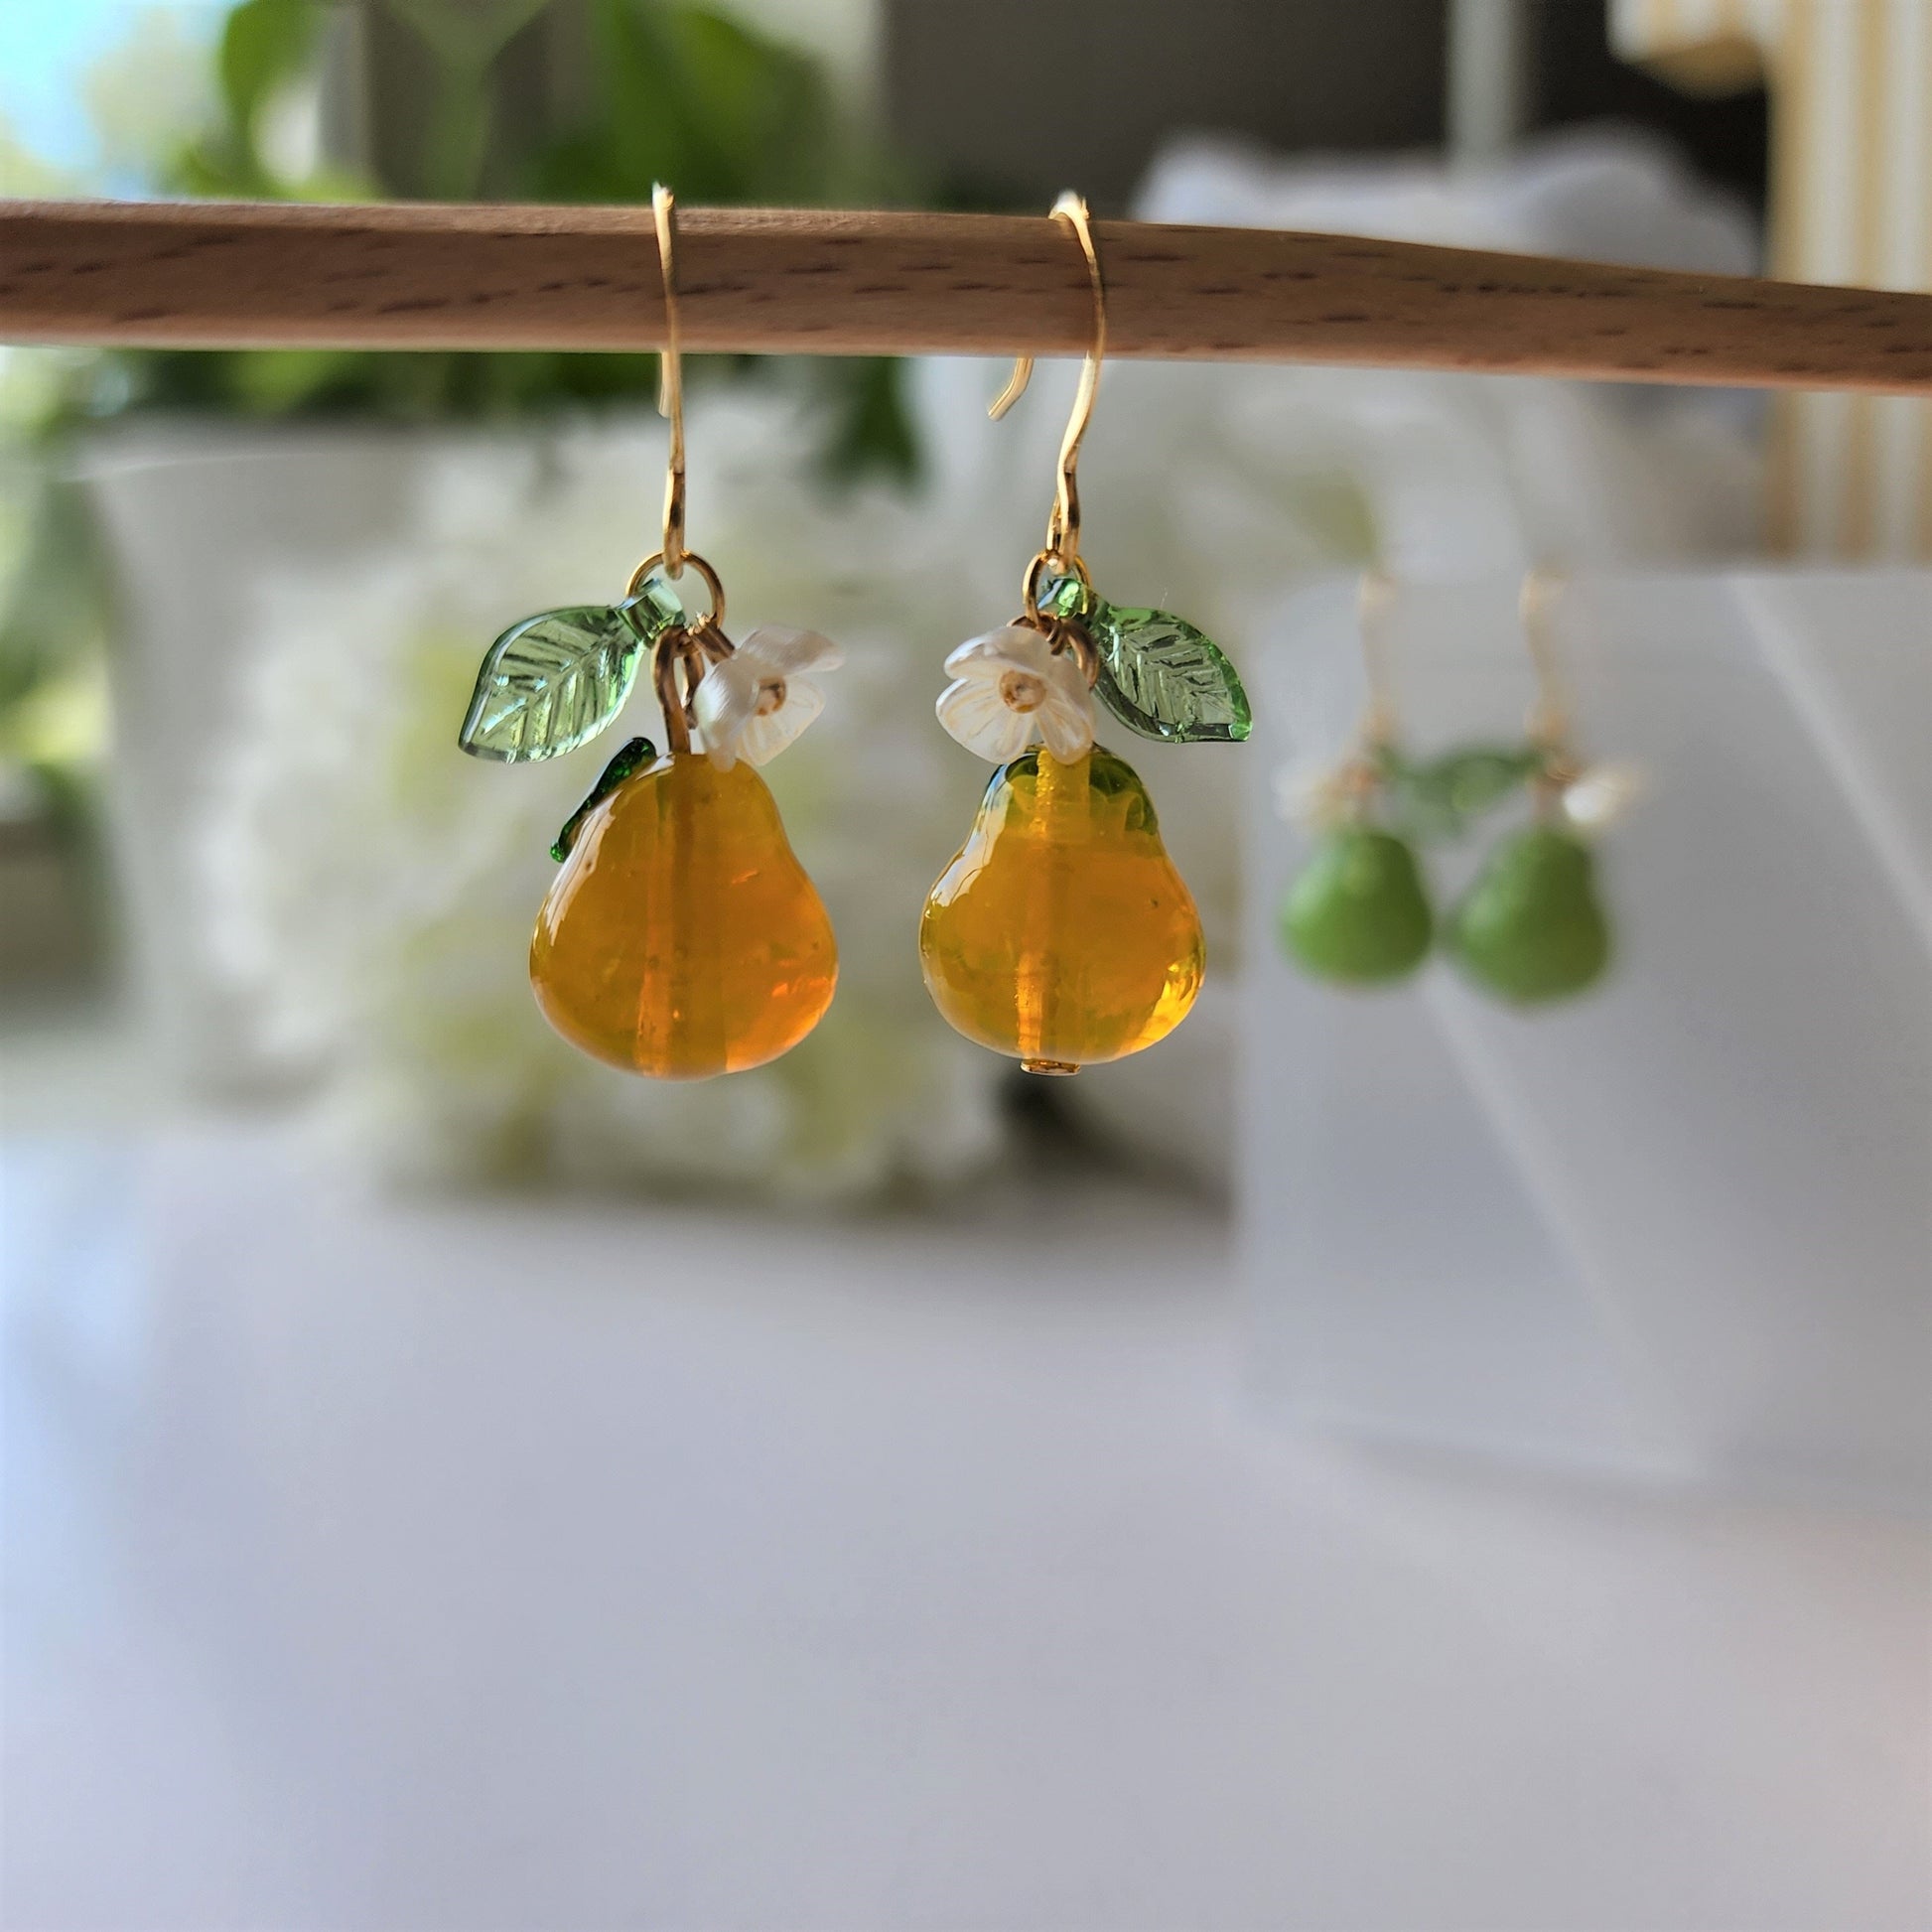 Pear earrings, Glass fruit dangle earrings, Food earrings, gift for her